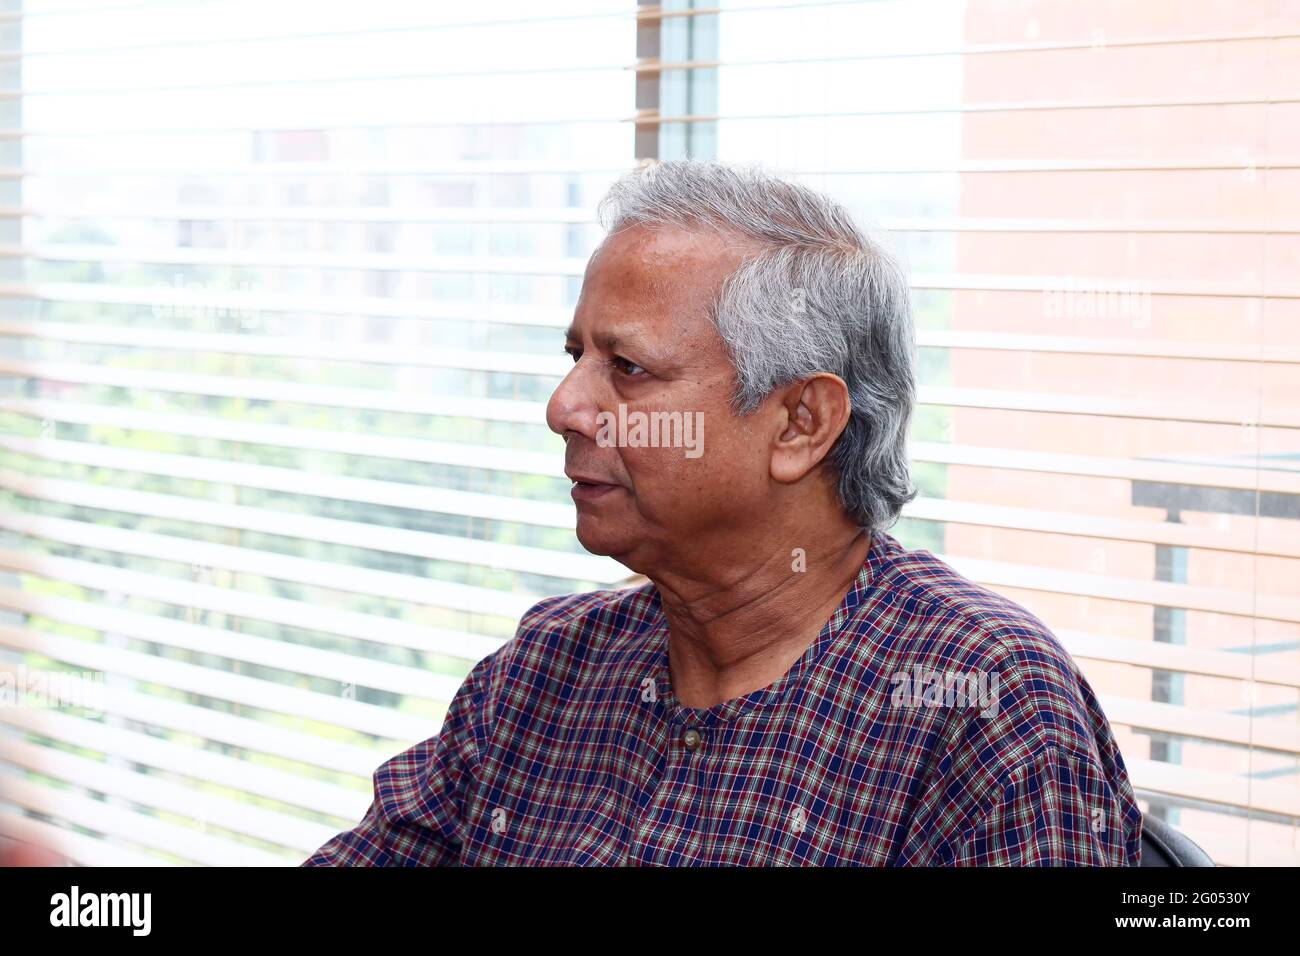 Bangladesh – September 20, 2012: Muhammad Yunus, a Bangladeshi social entrepreneur, banker, economist, and civil society leader is listening to the di Stock Photo